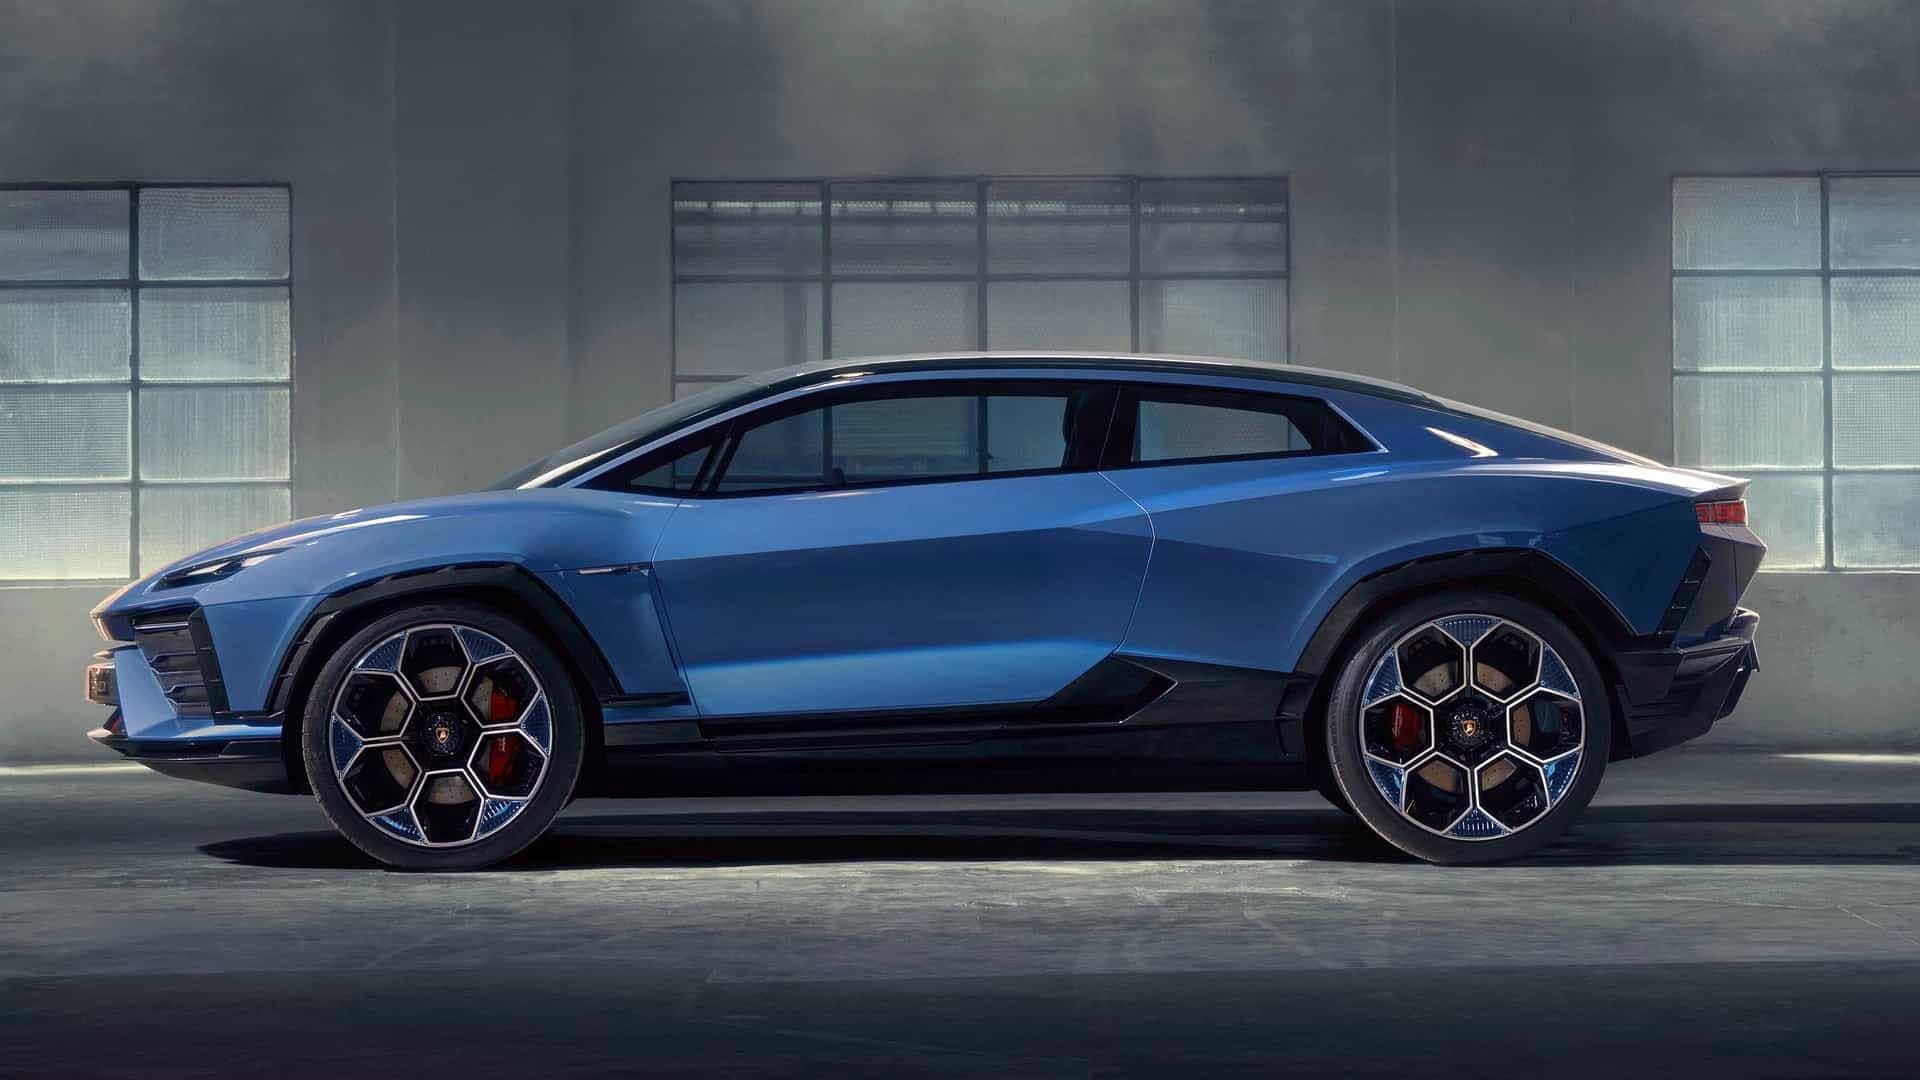 Un perfil plenamente Lamborghini, combinando formas del nuevo Countach con alturas del Urus